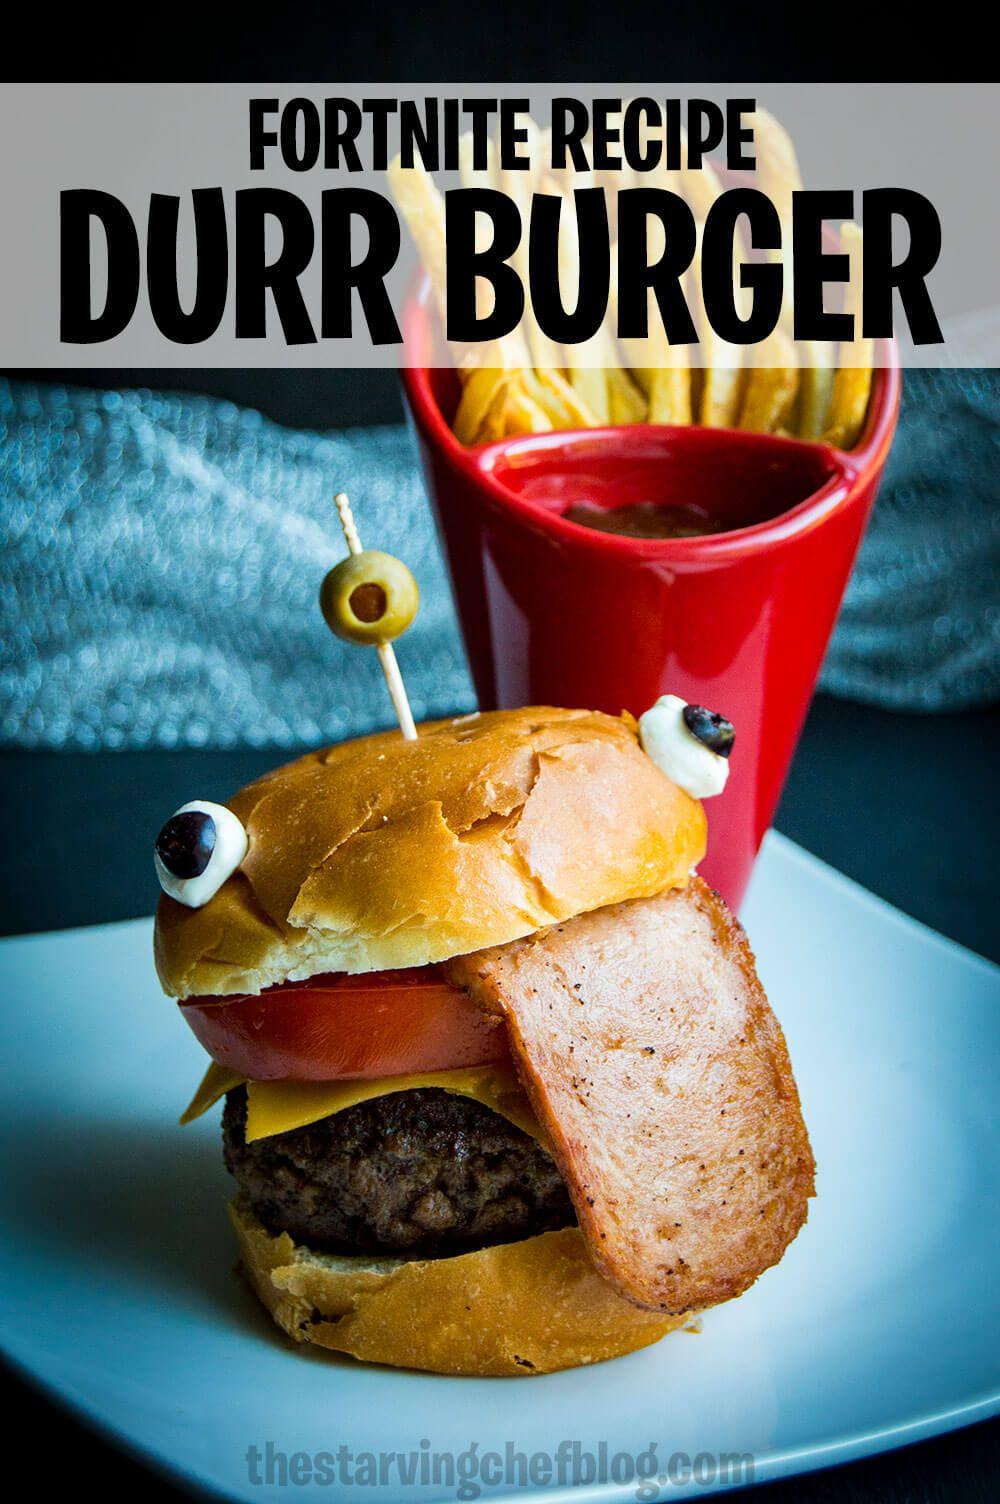 Durr Burger Logo - Durr Burger | Fortnite Recipe | The Starving Chef Blog